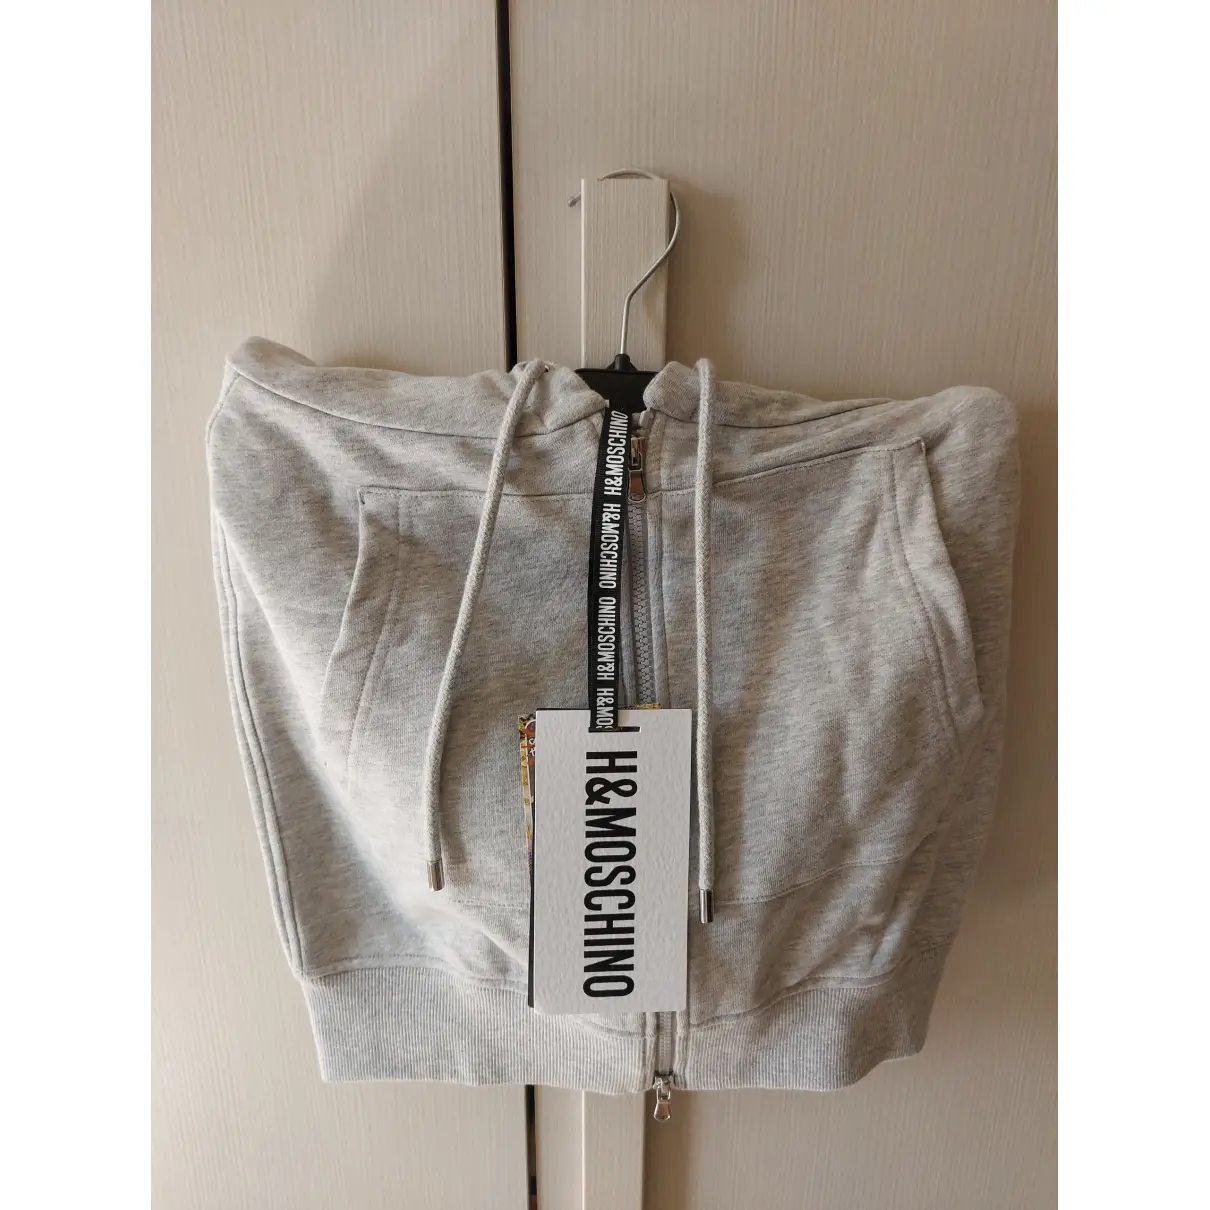 Buy Moschino for H&M Mini skirt online